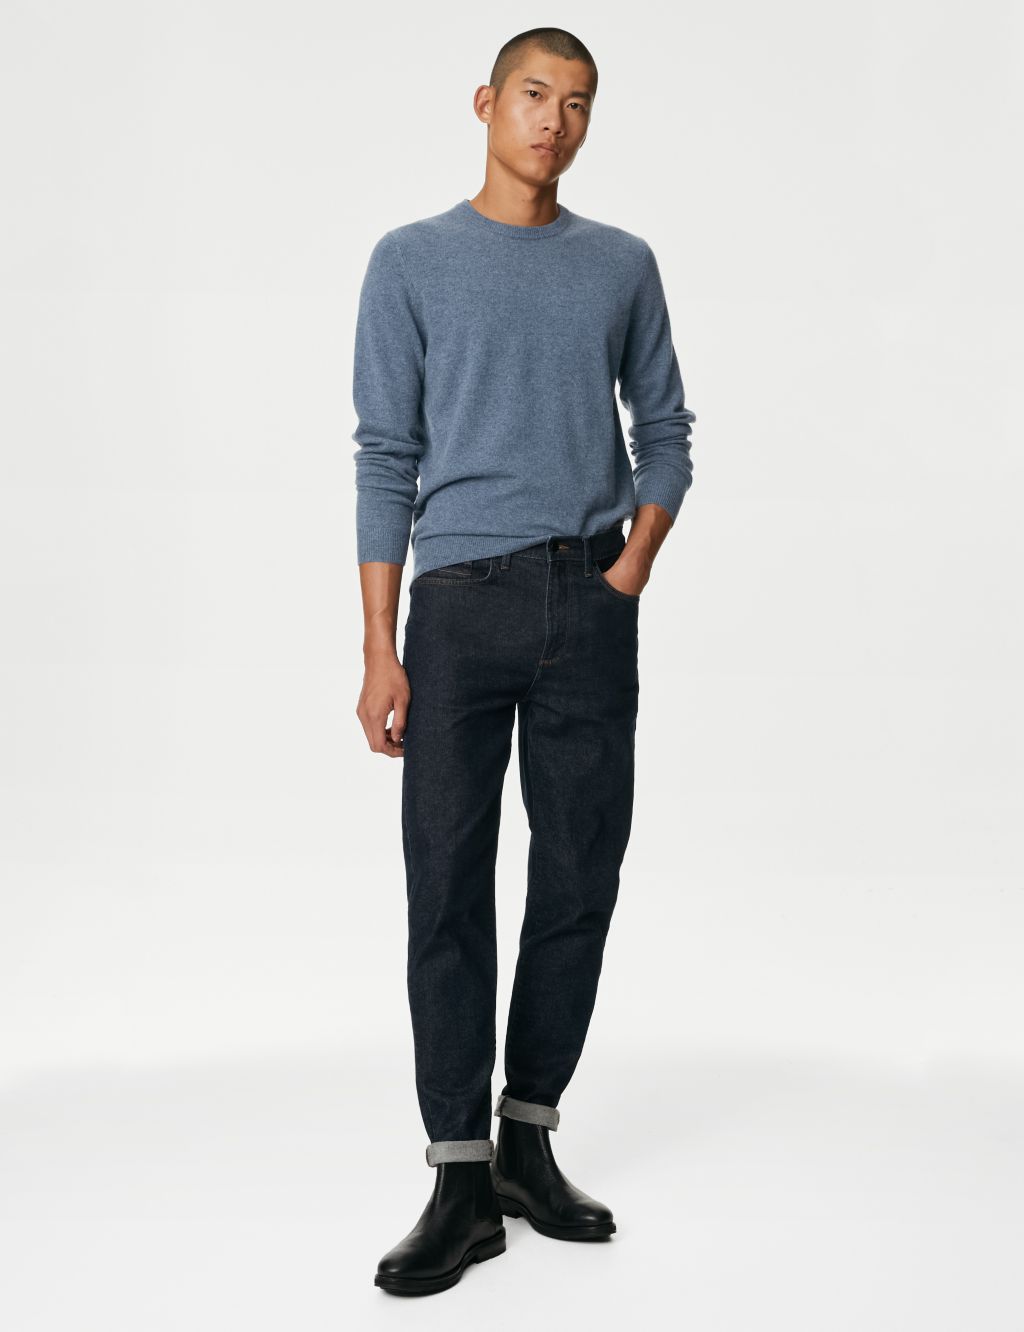 Men's Cashmere Knitwear | M&S